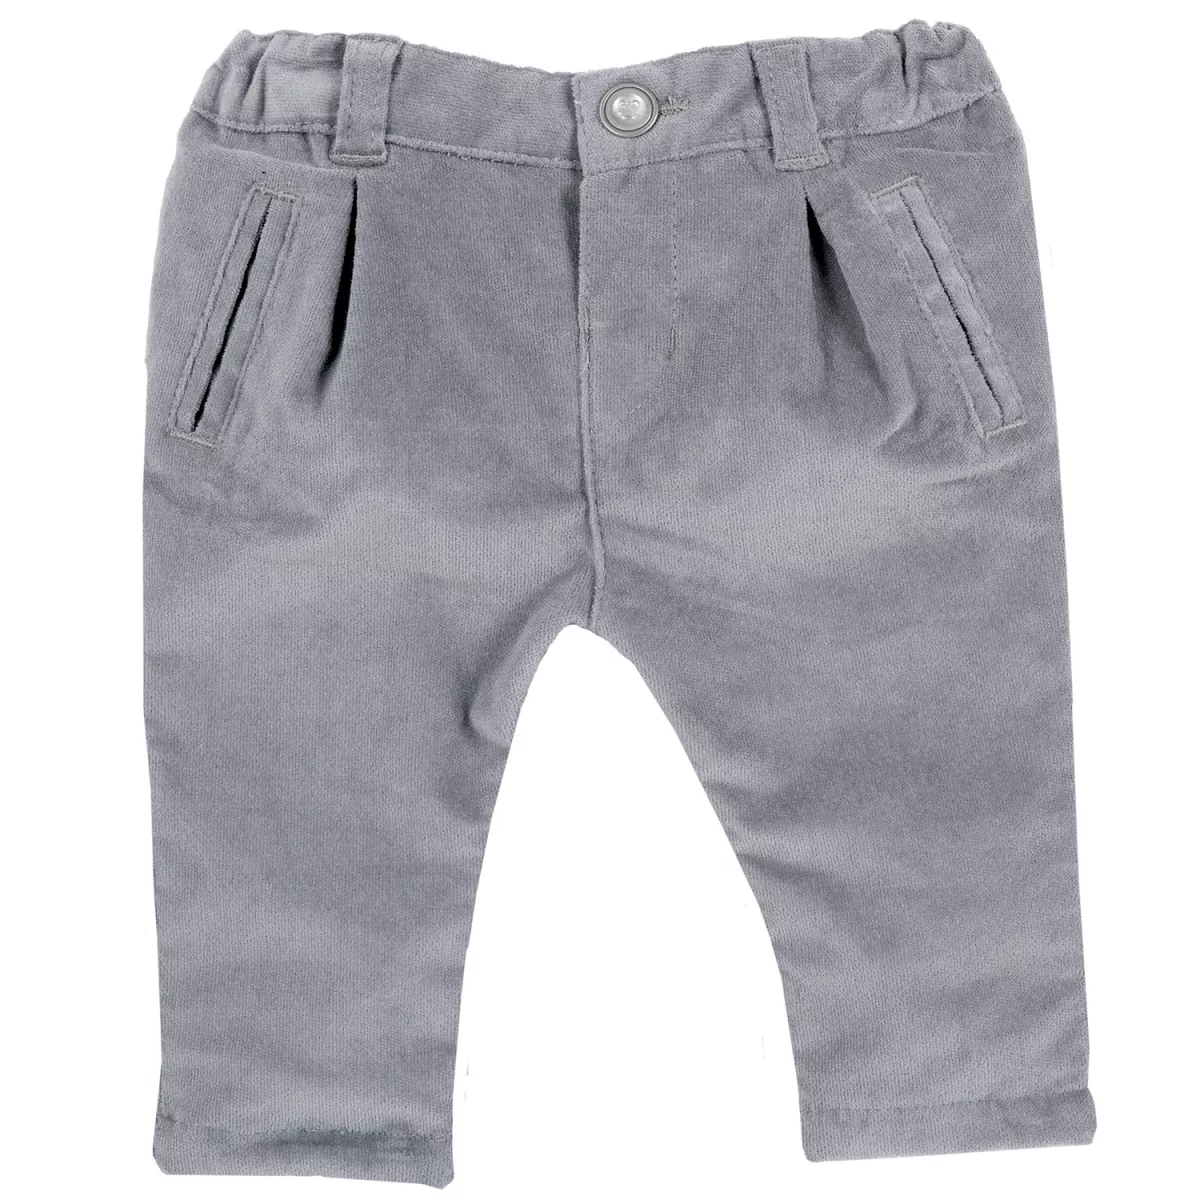 Pantalon copii Chicco, gri inchis, 80